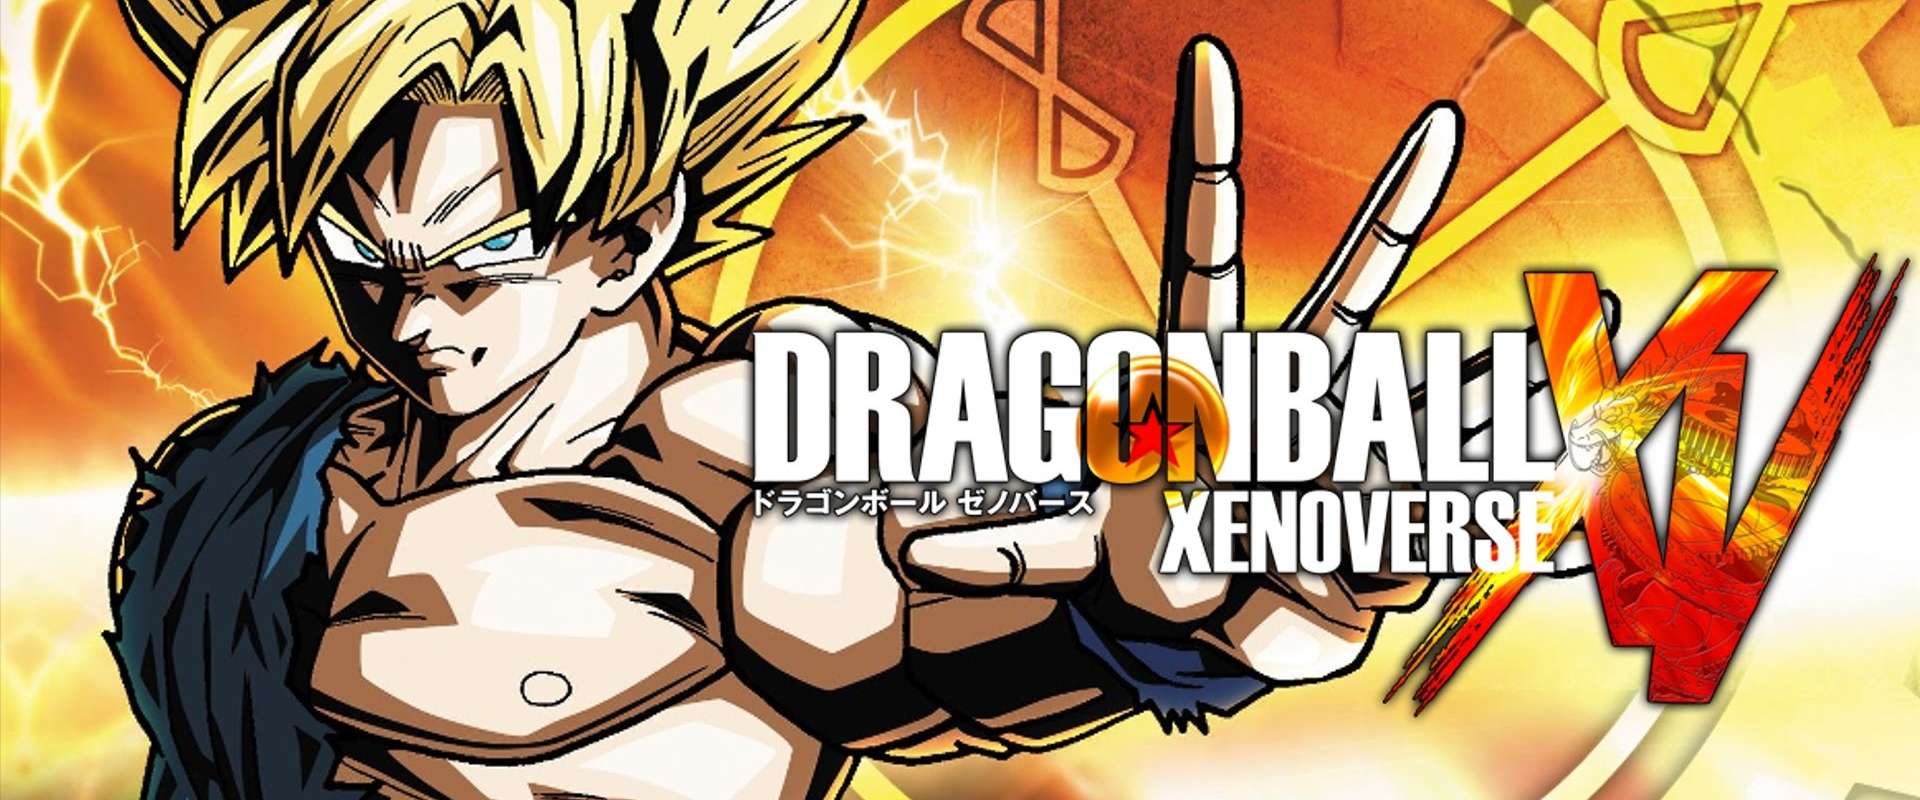 Dragon Ball Xenoverse Ps3 Legenda Português Jogo Psn Digital